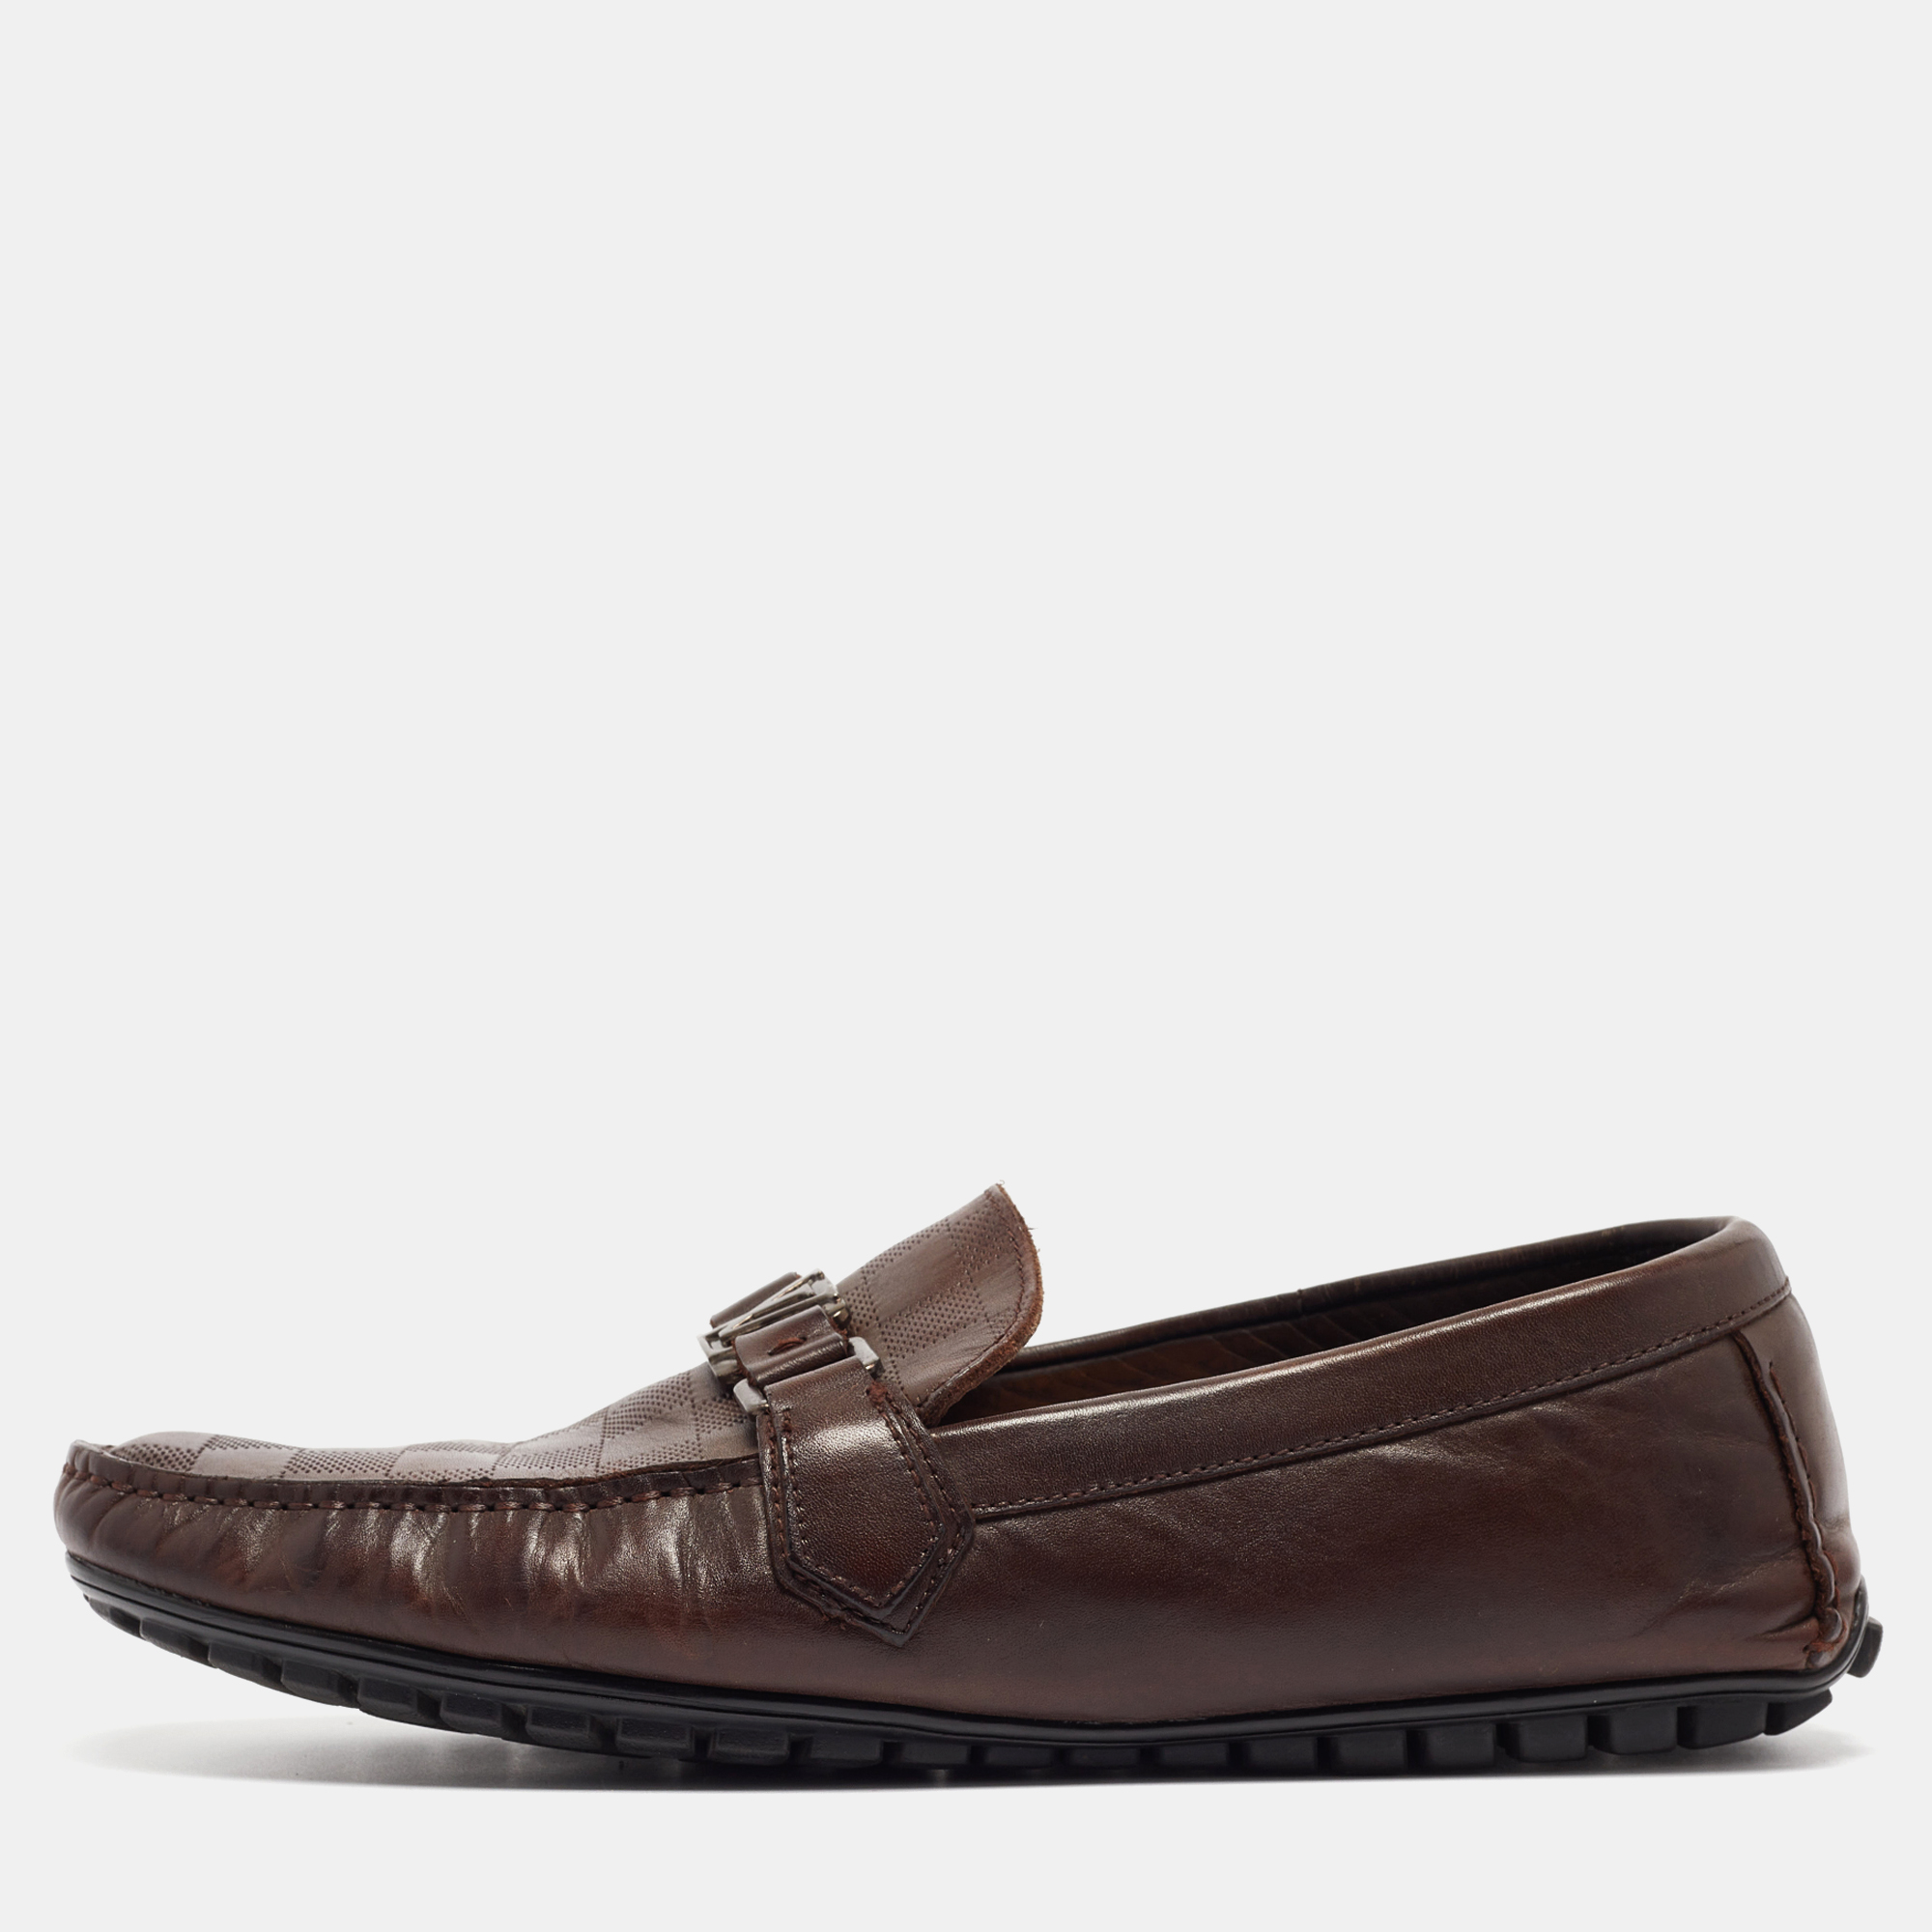 Louis vuitton brown damier leather hockenheim loafers size 44